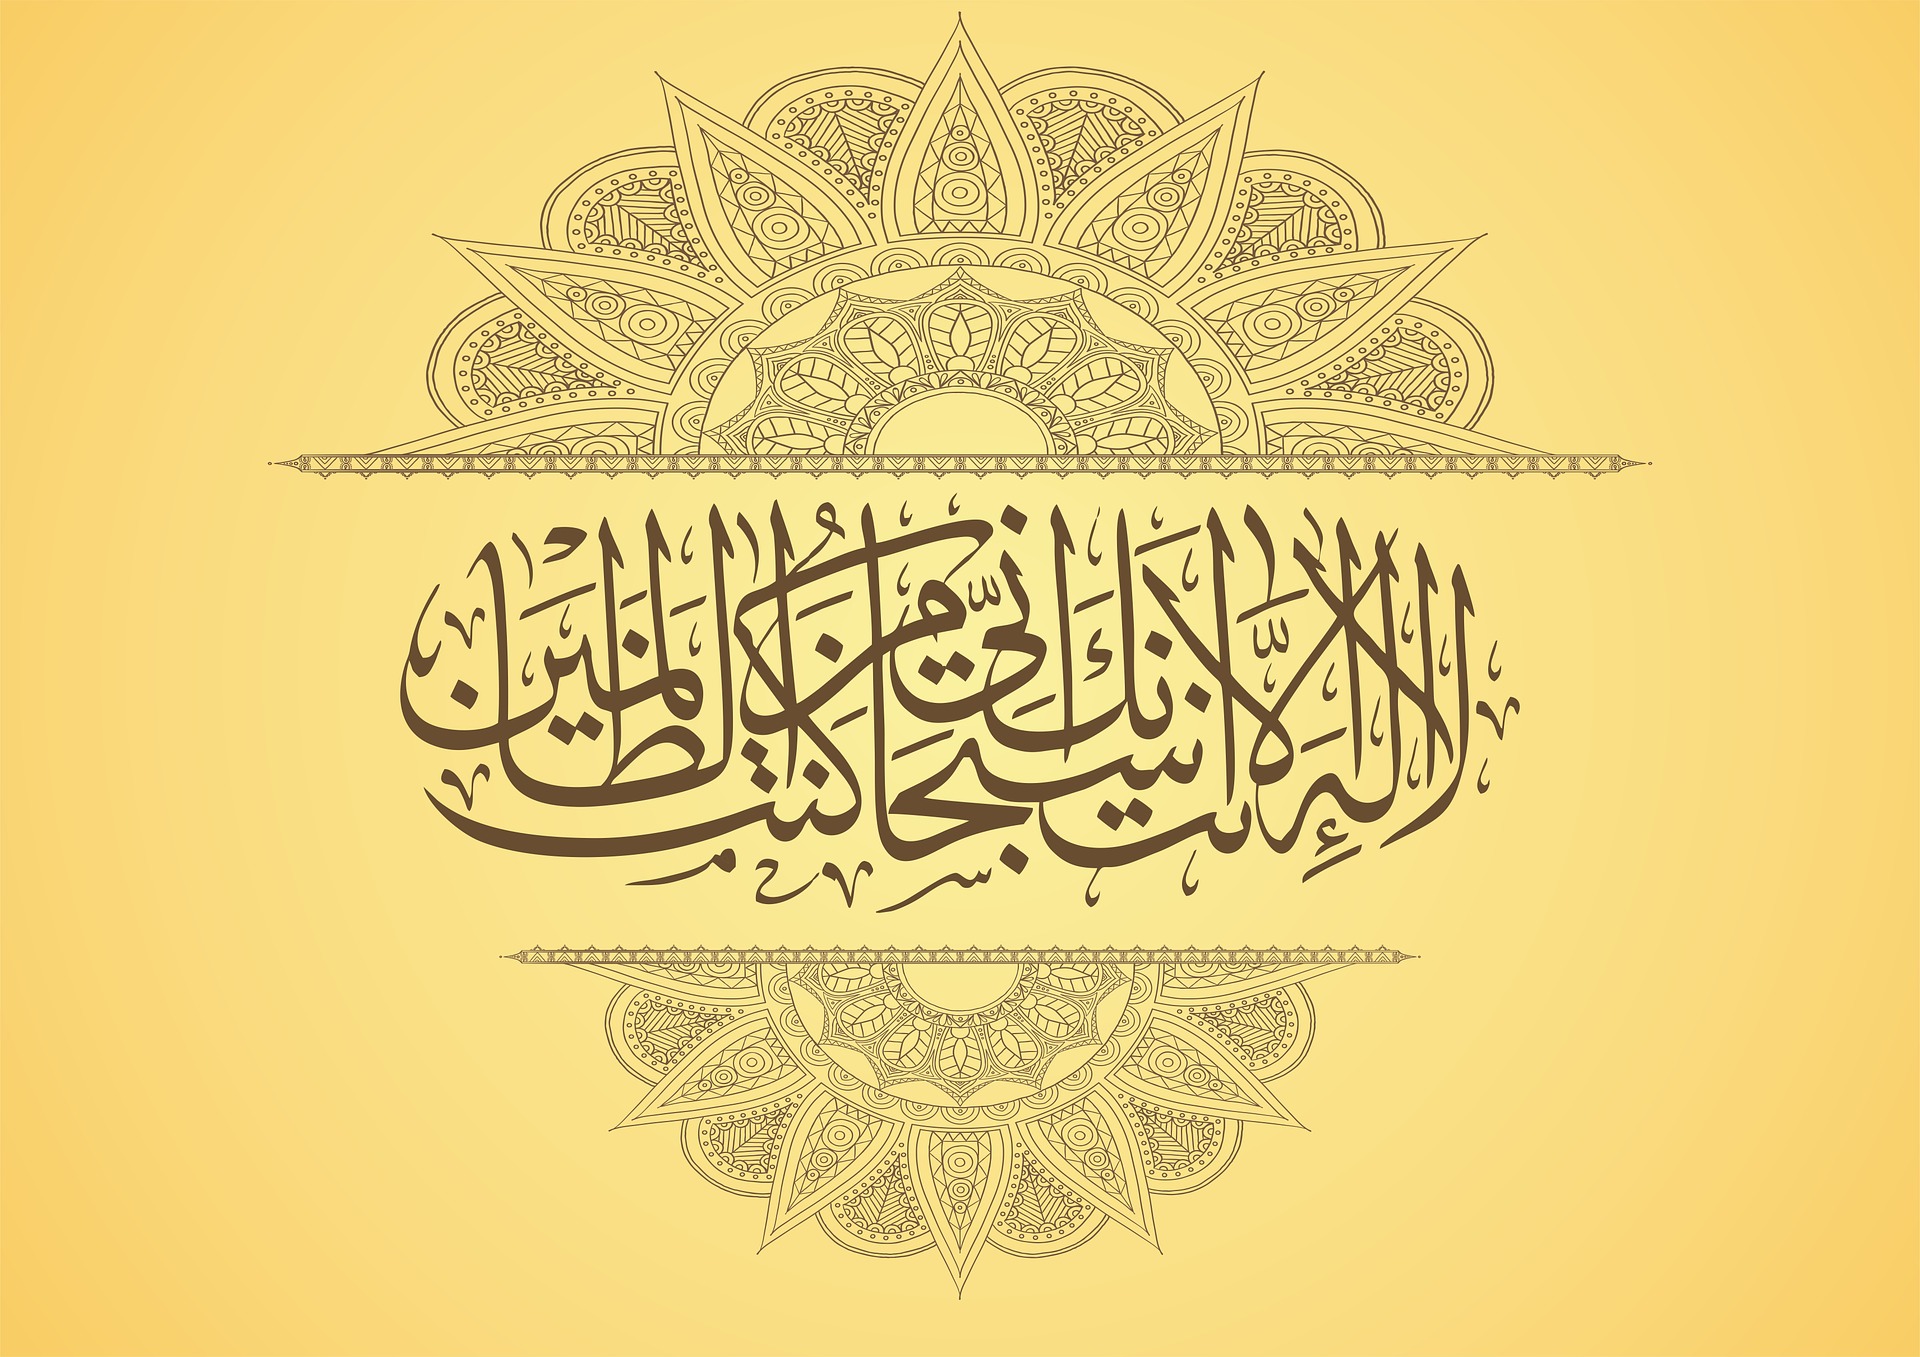 Arabic language writing